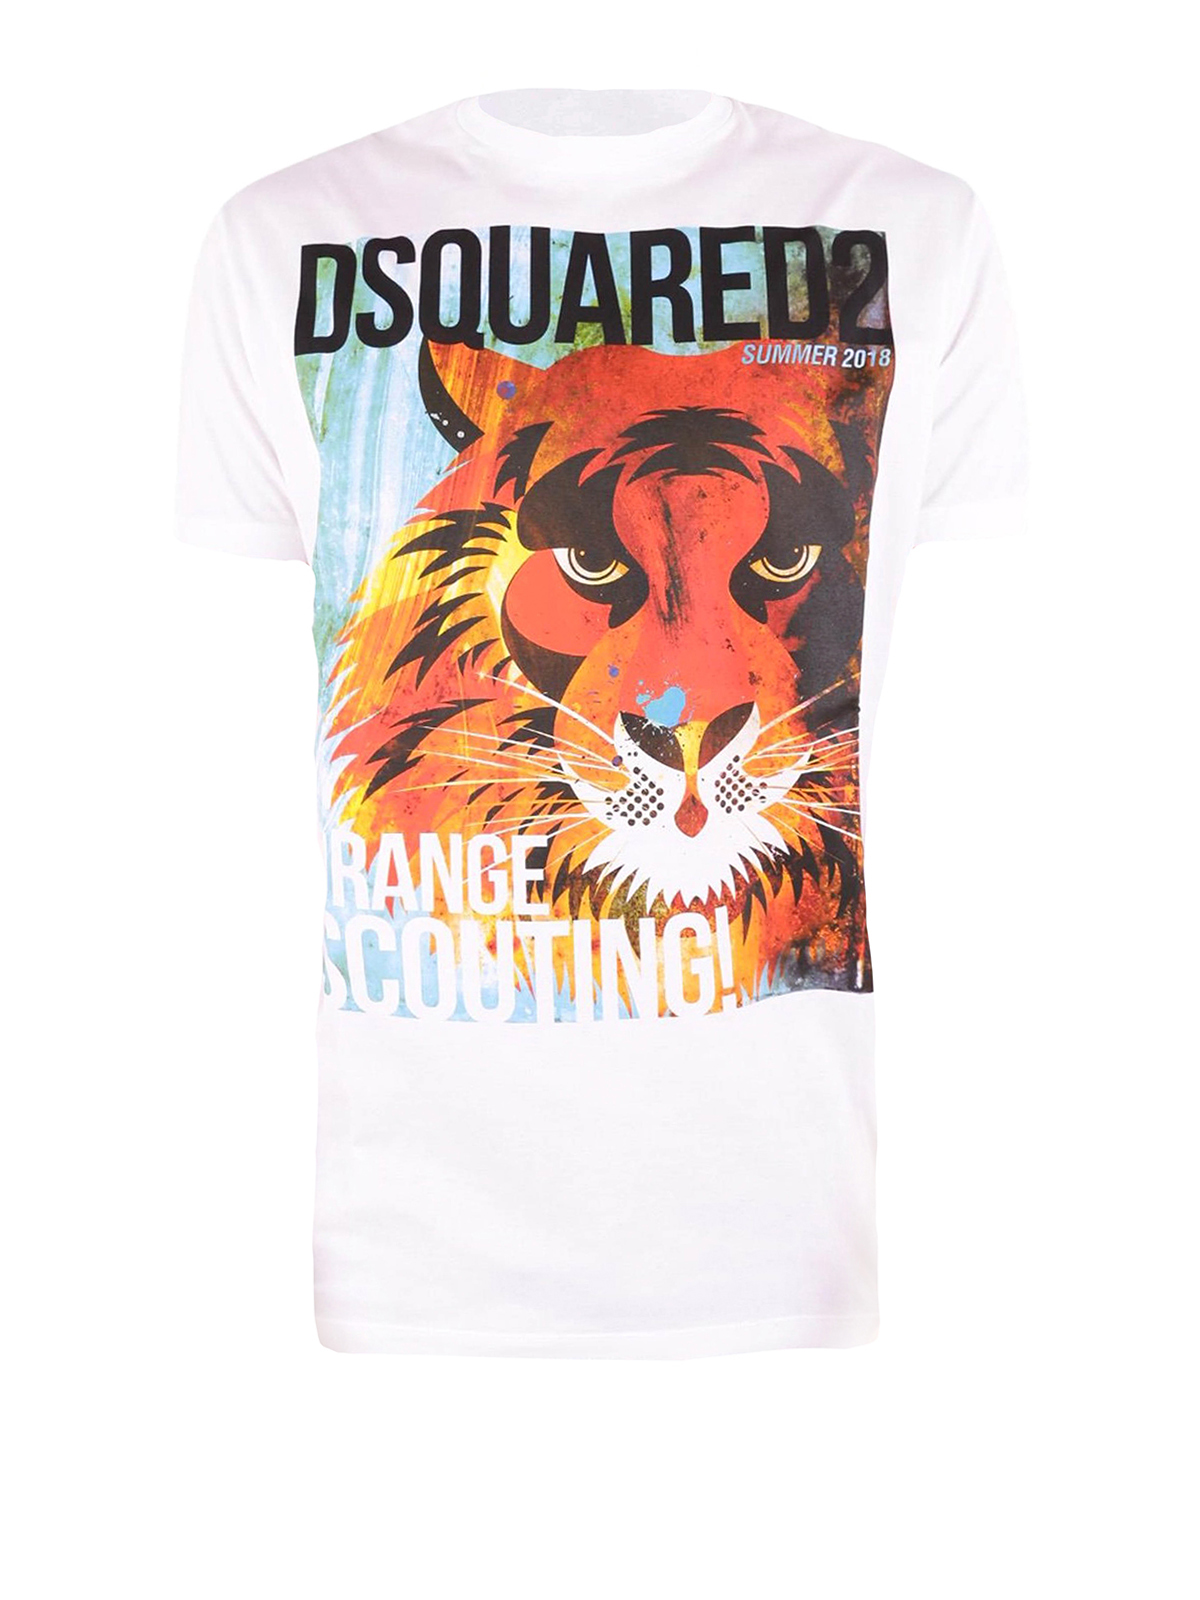 dsquared2 t shirt tiger